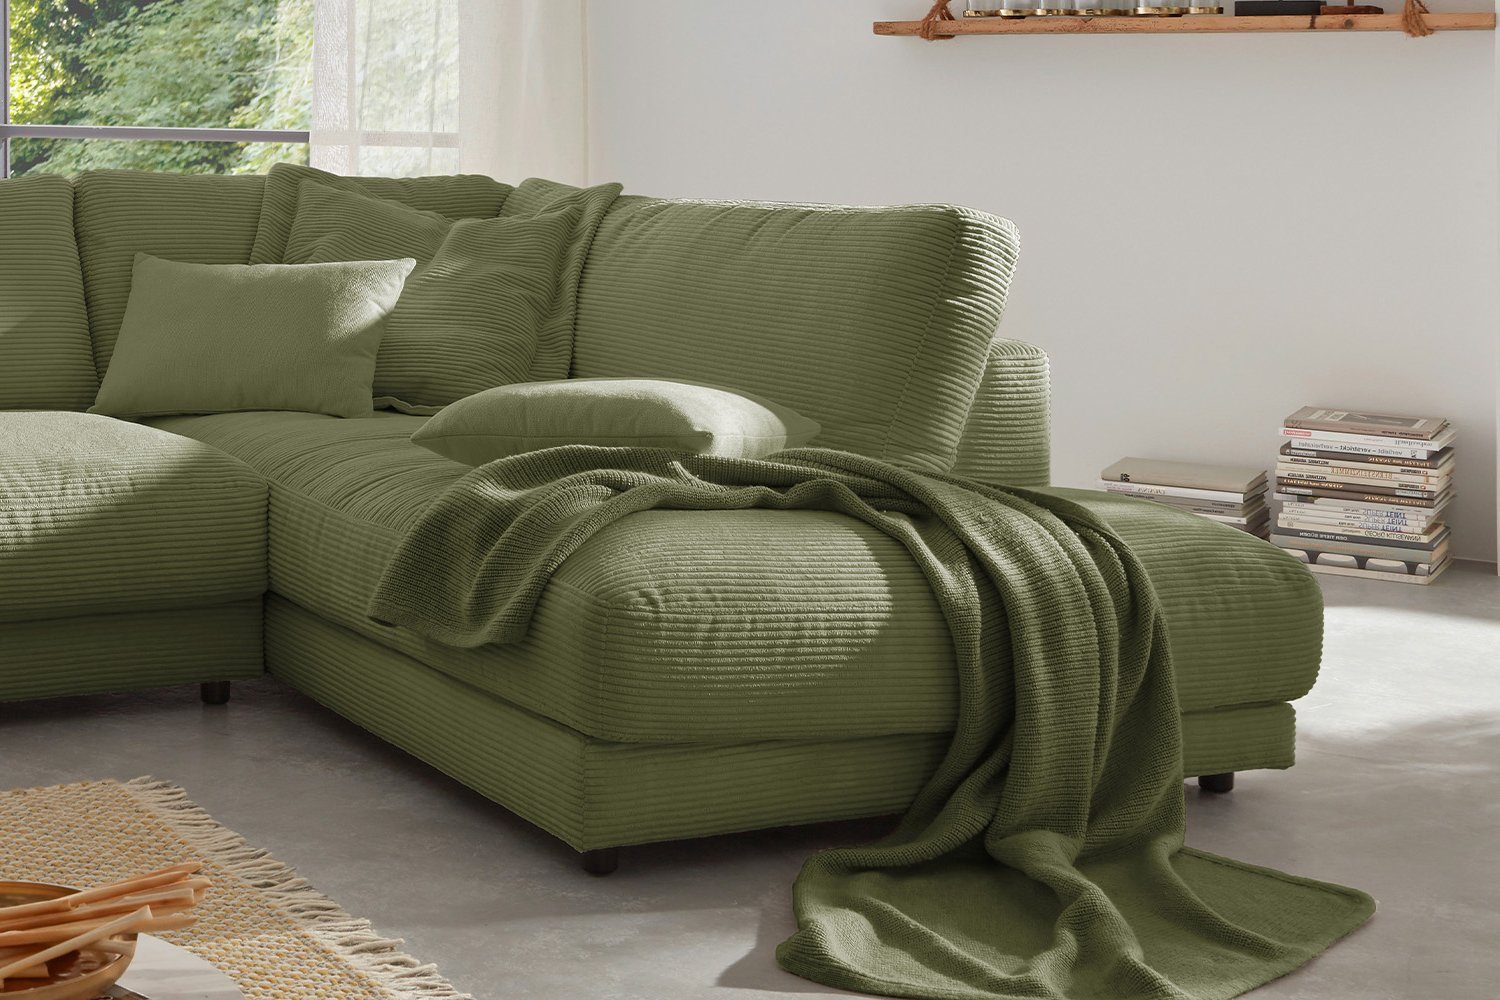 KAWOLA Ecksofa MADELINE, Sofa od. versch. olivgrün Farben rechts Cord, Recamiere links